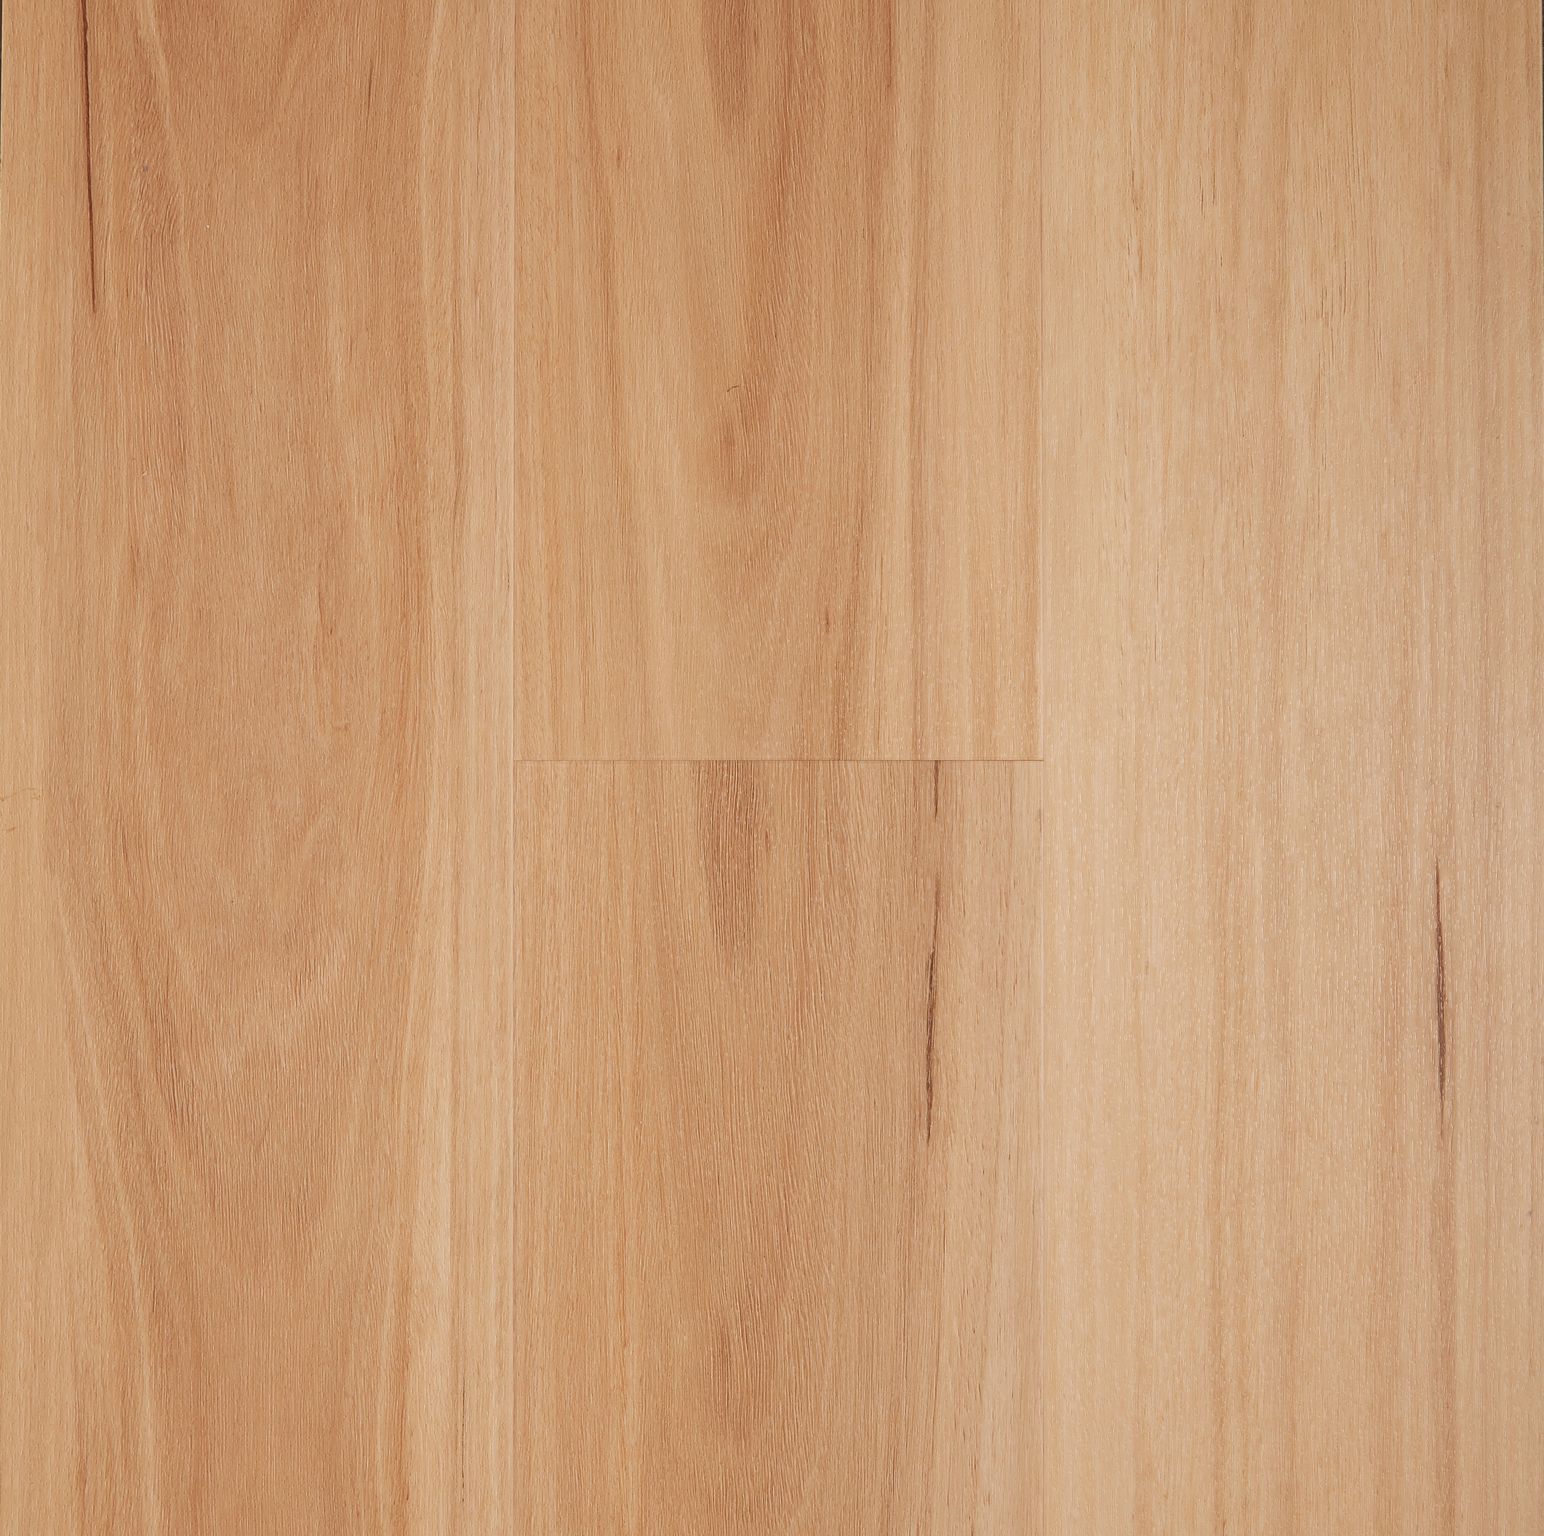 Easi Plank Natural Blackbutt Hybrid Flooring 1520mm X 180mm X 6 5mm 2 189m2 Per Pack Flooring World